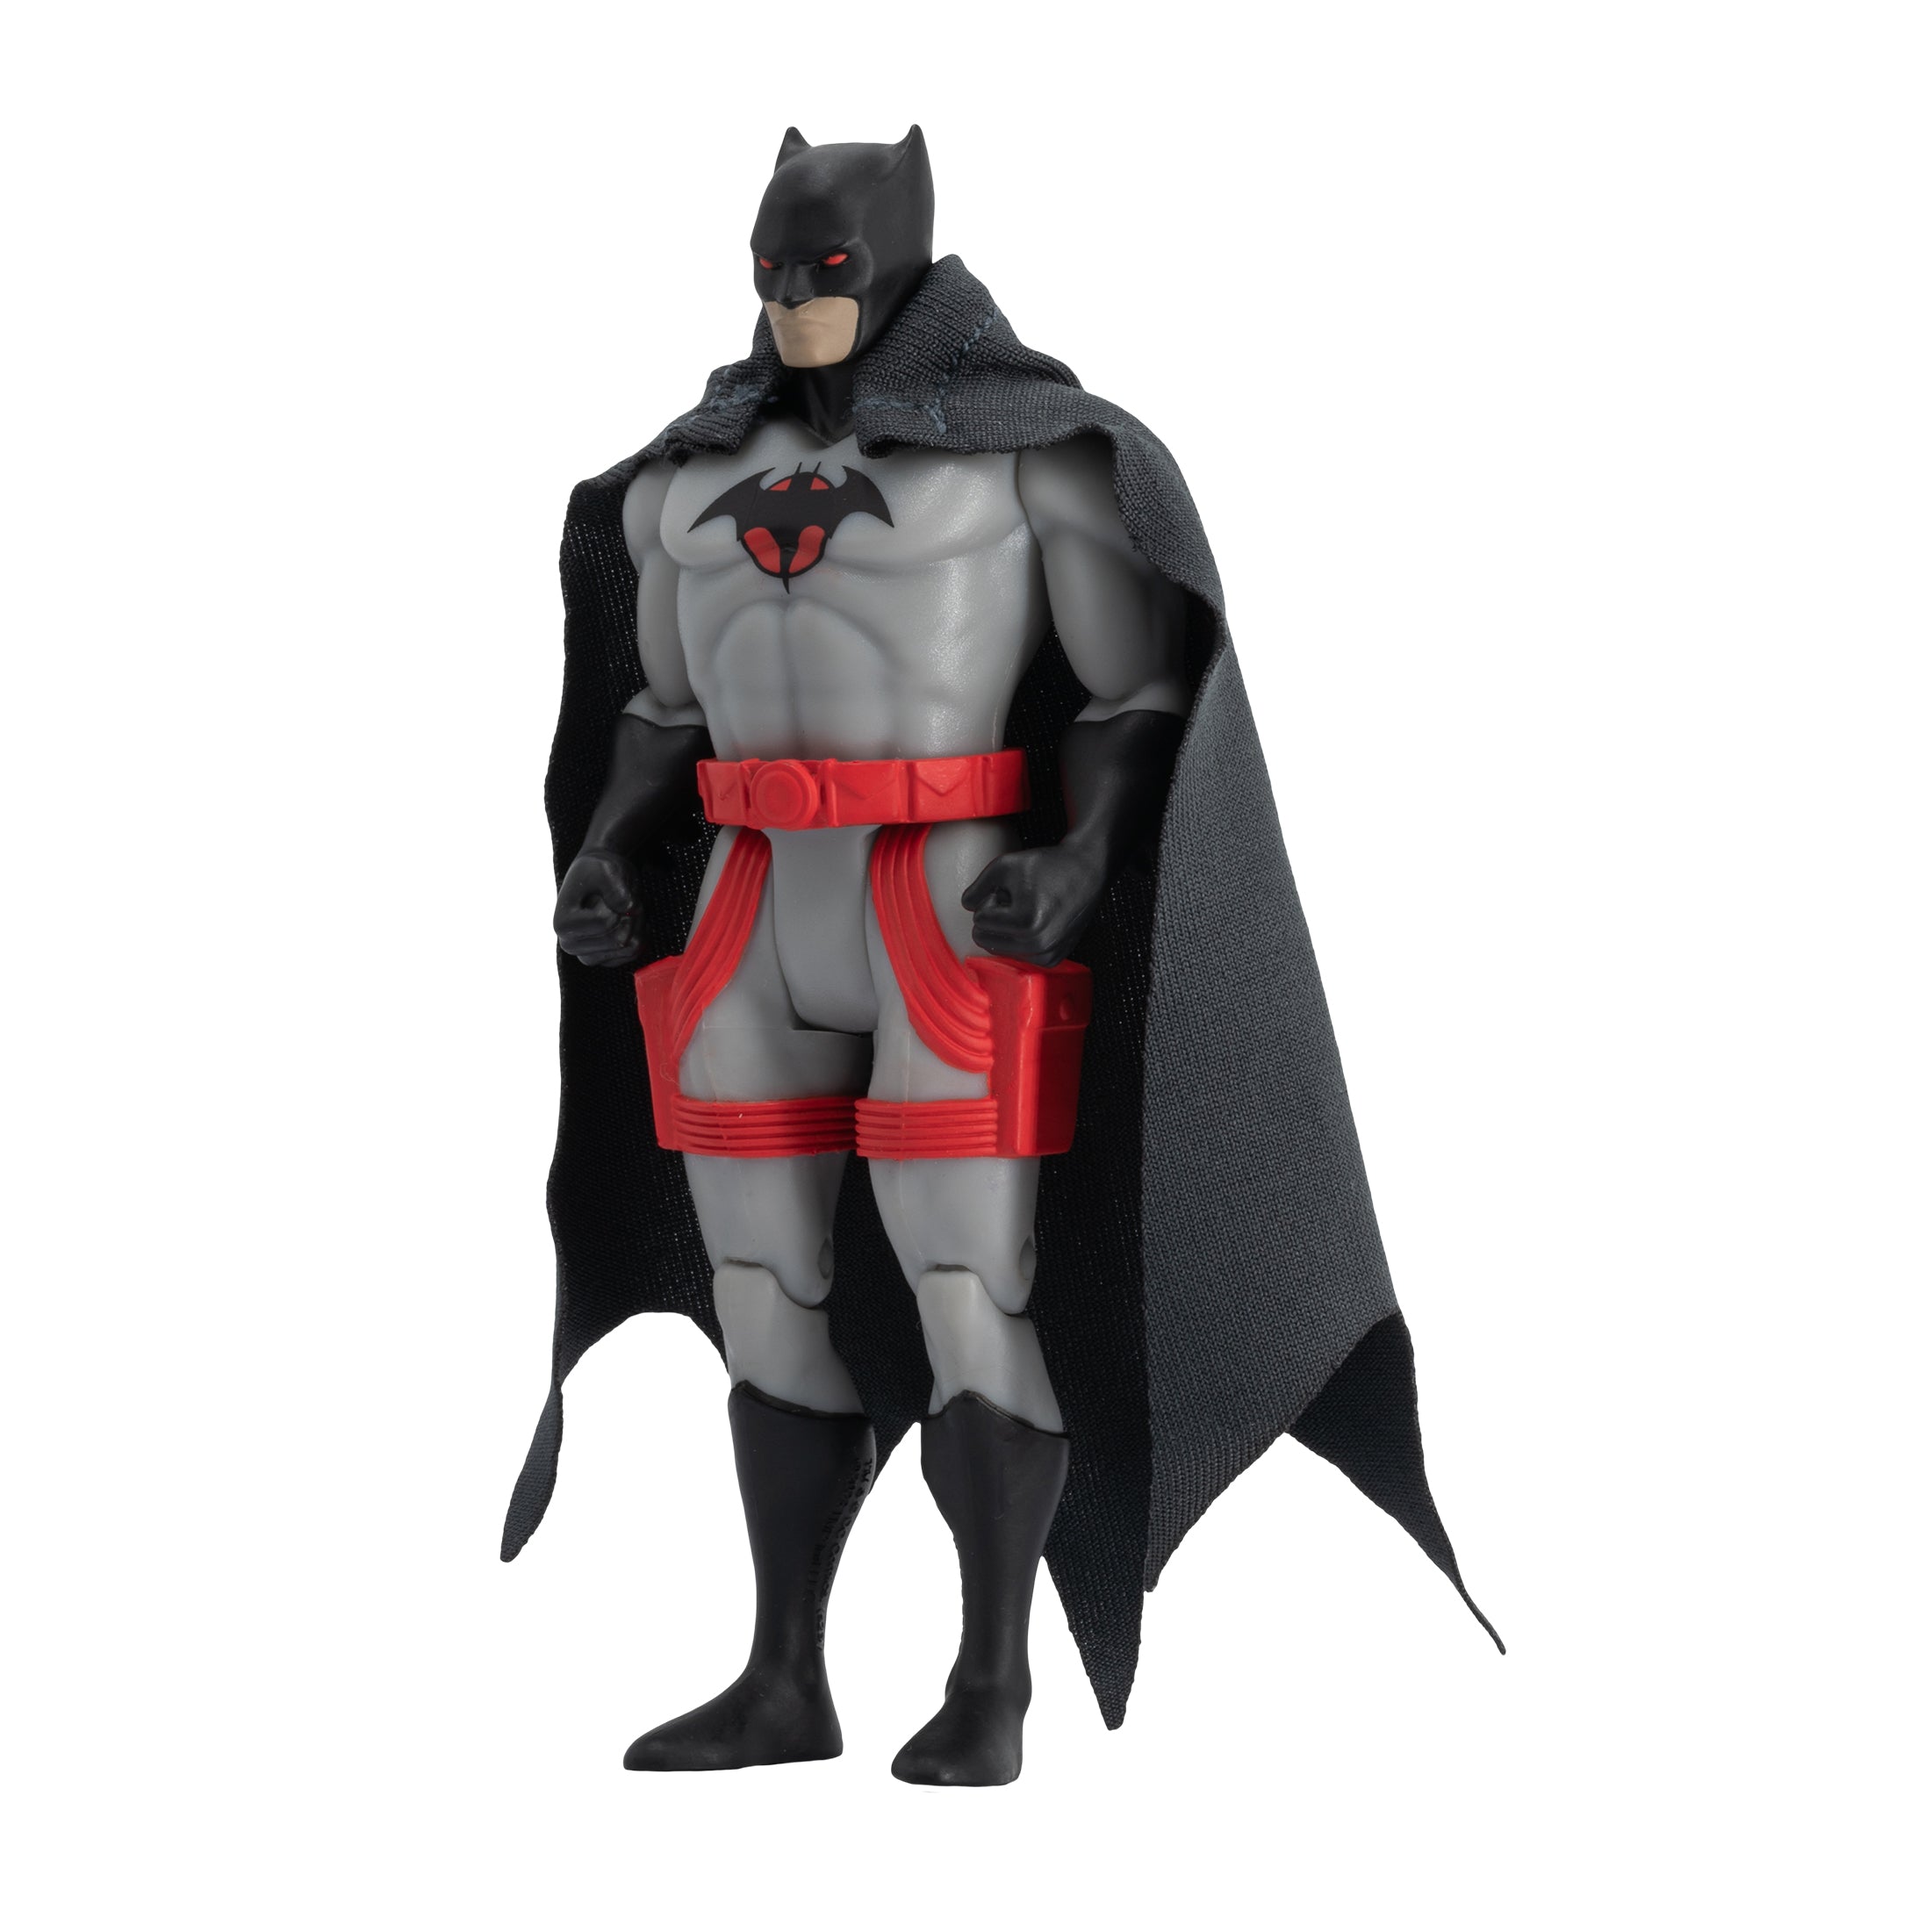 McFarlane Super Powers Figura de Accion: DC Flashpoint - Batman Thomas Wayne 4.5 Pulgadas